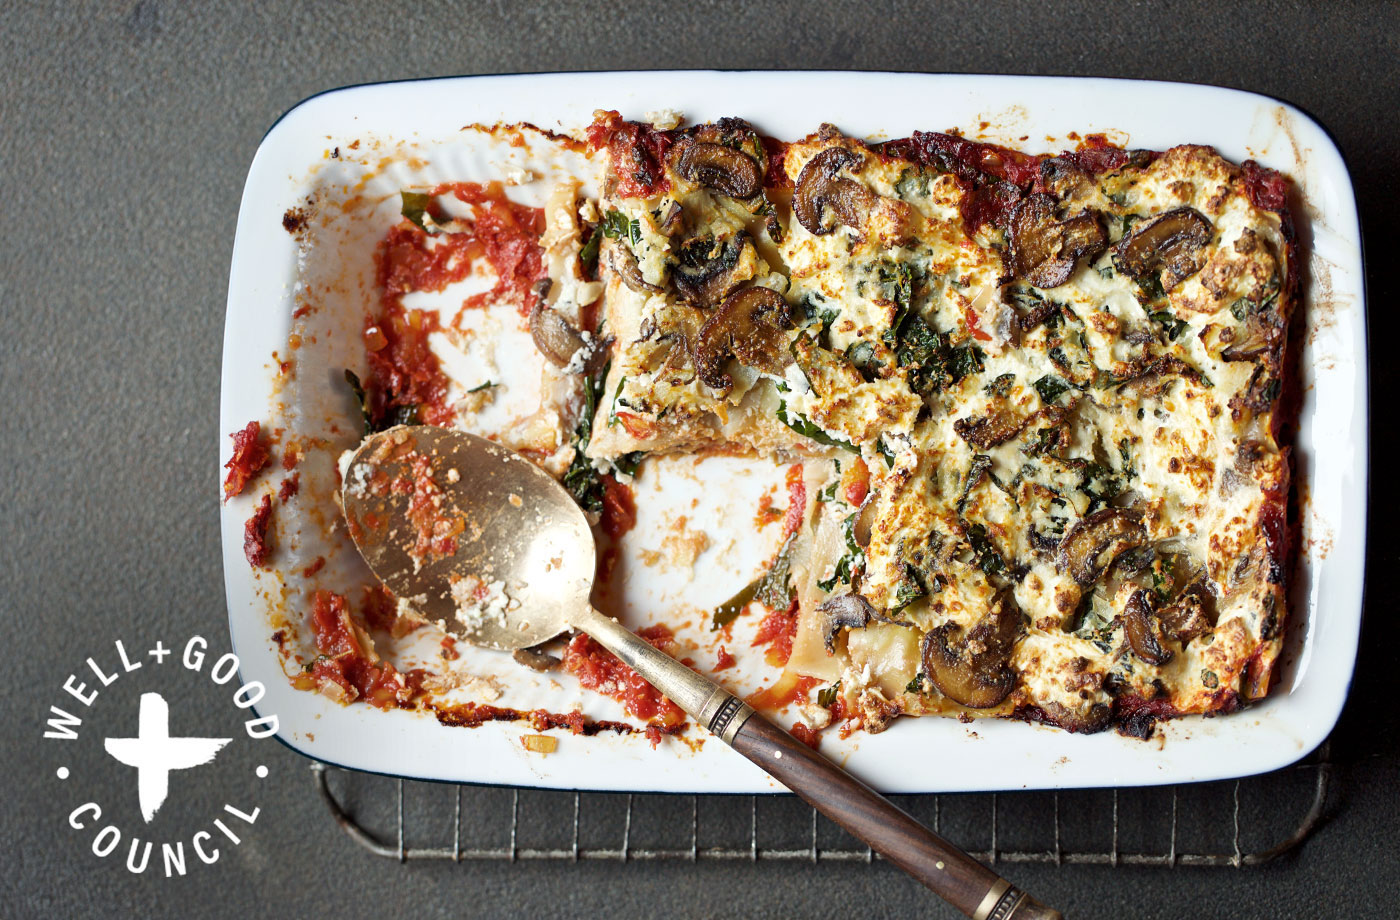 mushroom lasagna recipe with kale